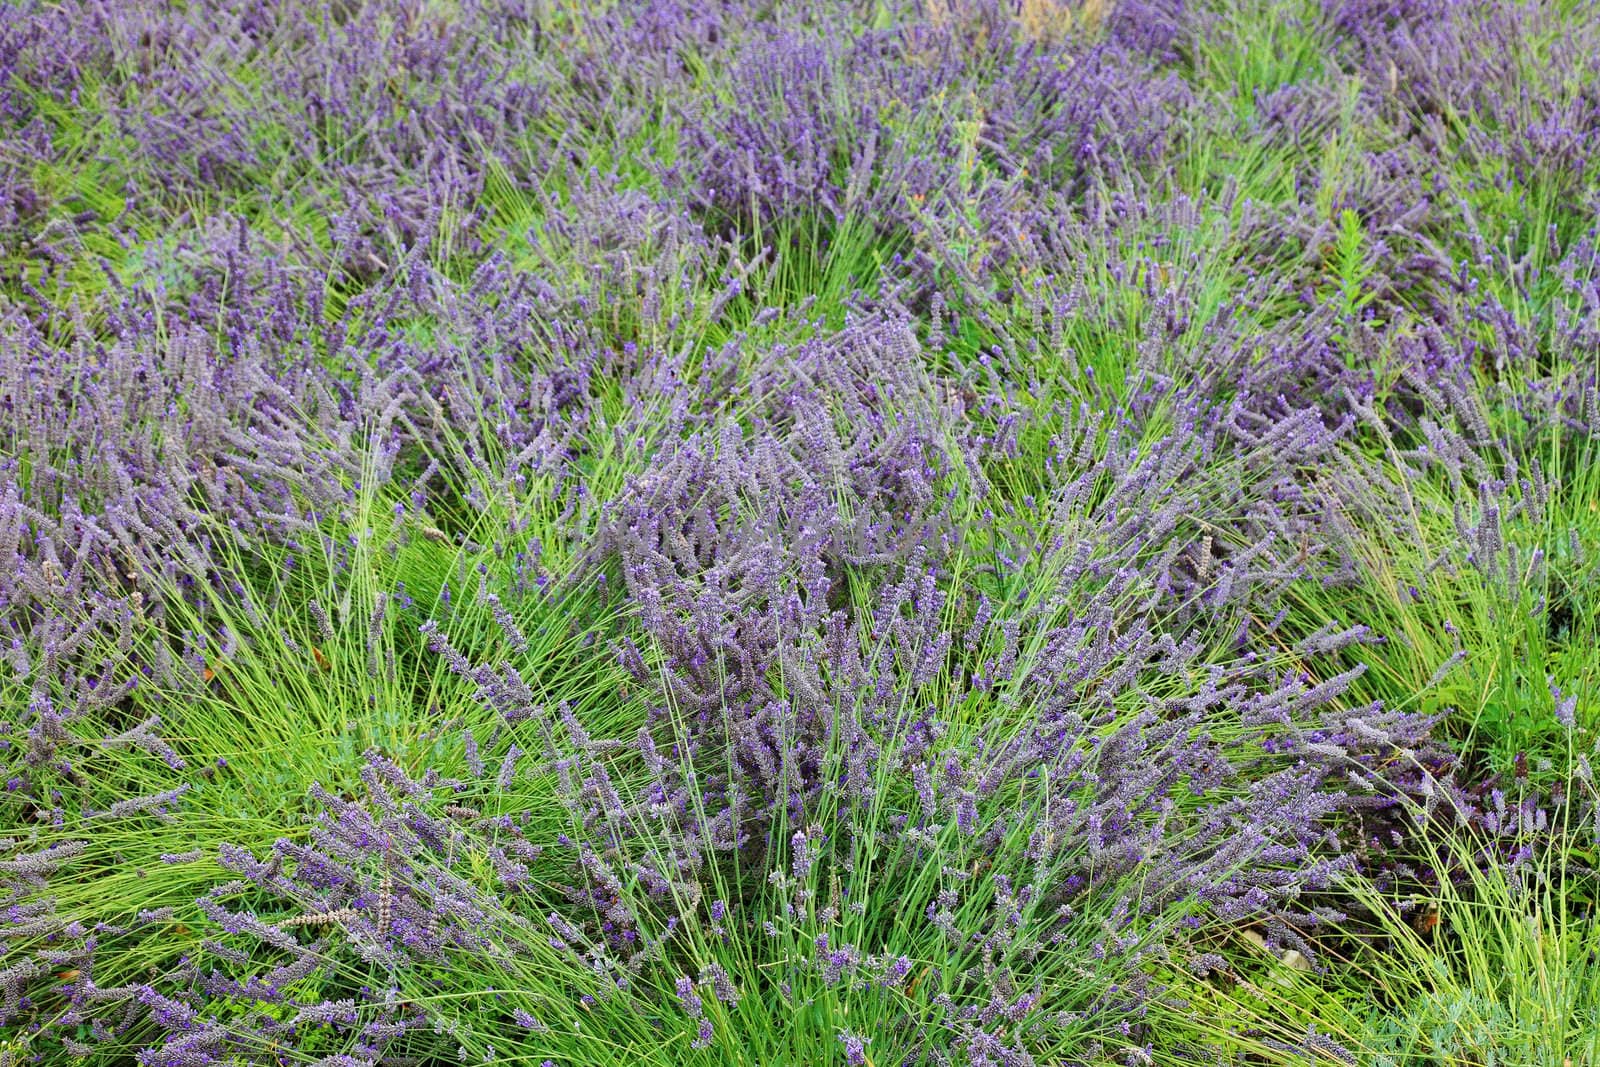 Purple lavender bushes in France, Europe.